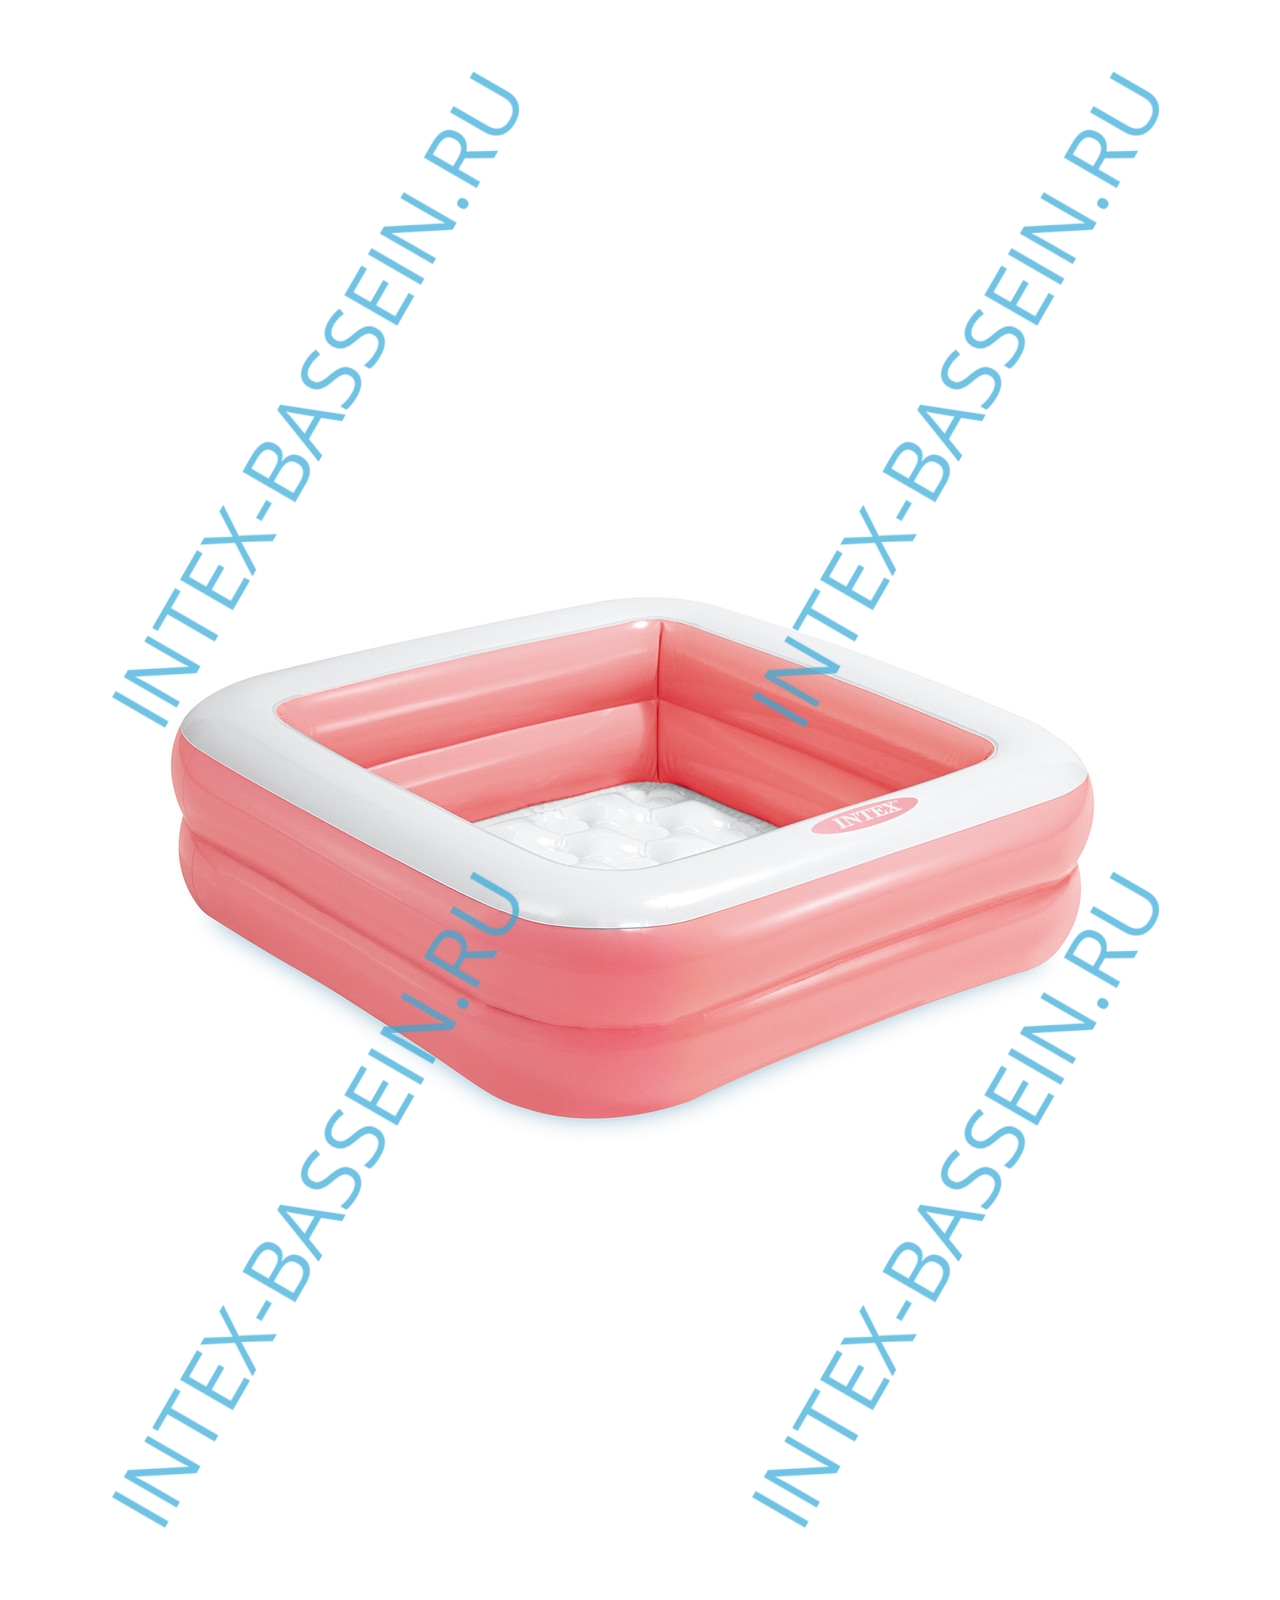  Надувной детский бассейн INTEX Play Box - розовый 86 х 86 х 25 см, артикул 57100